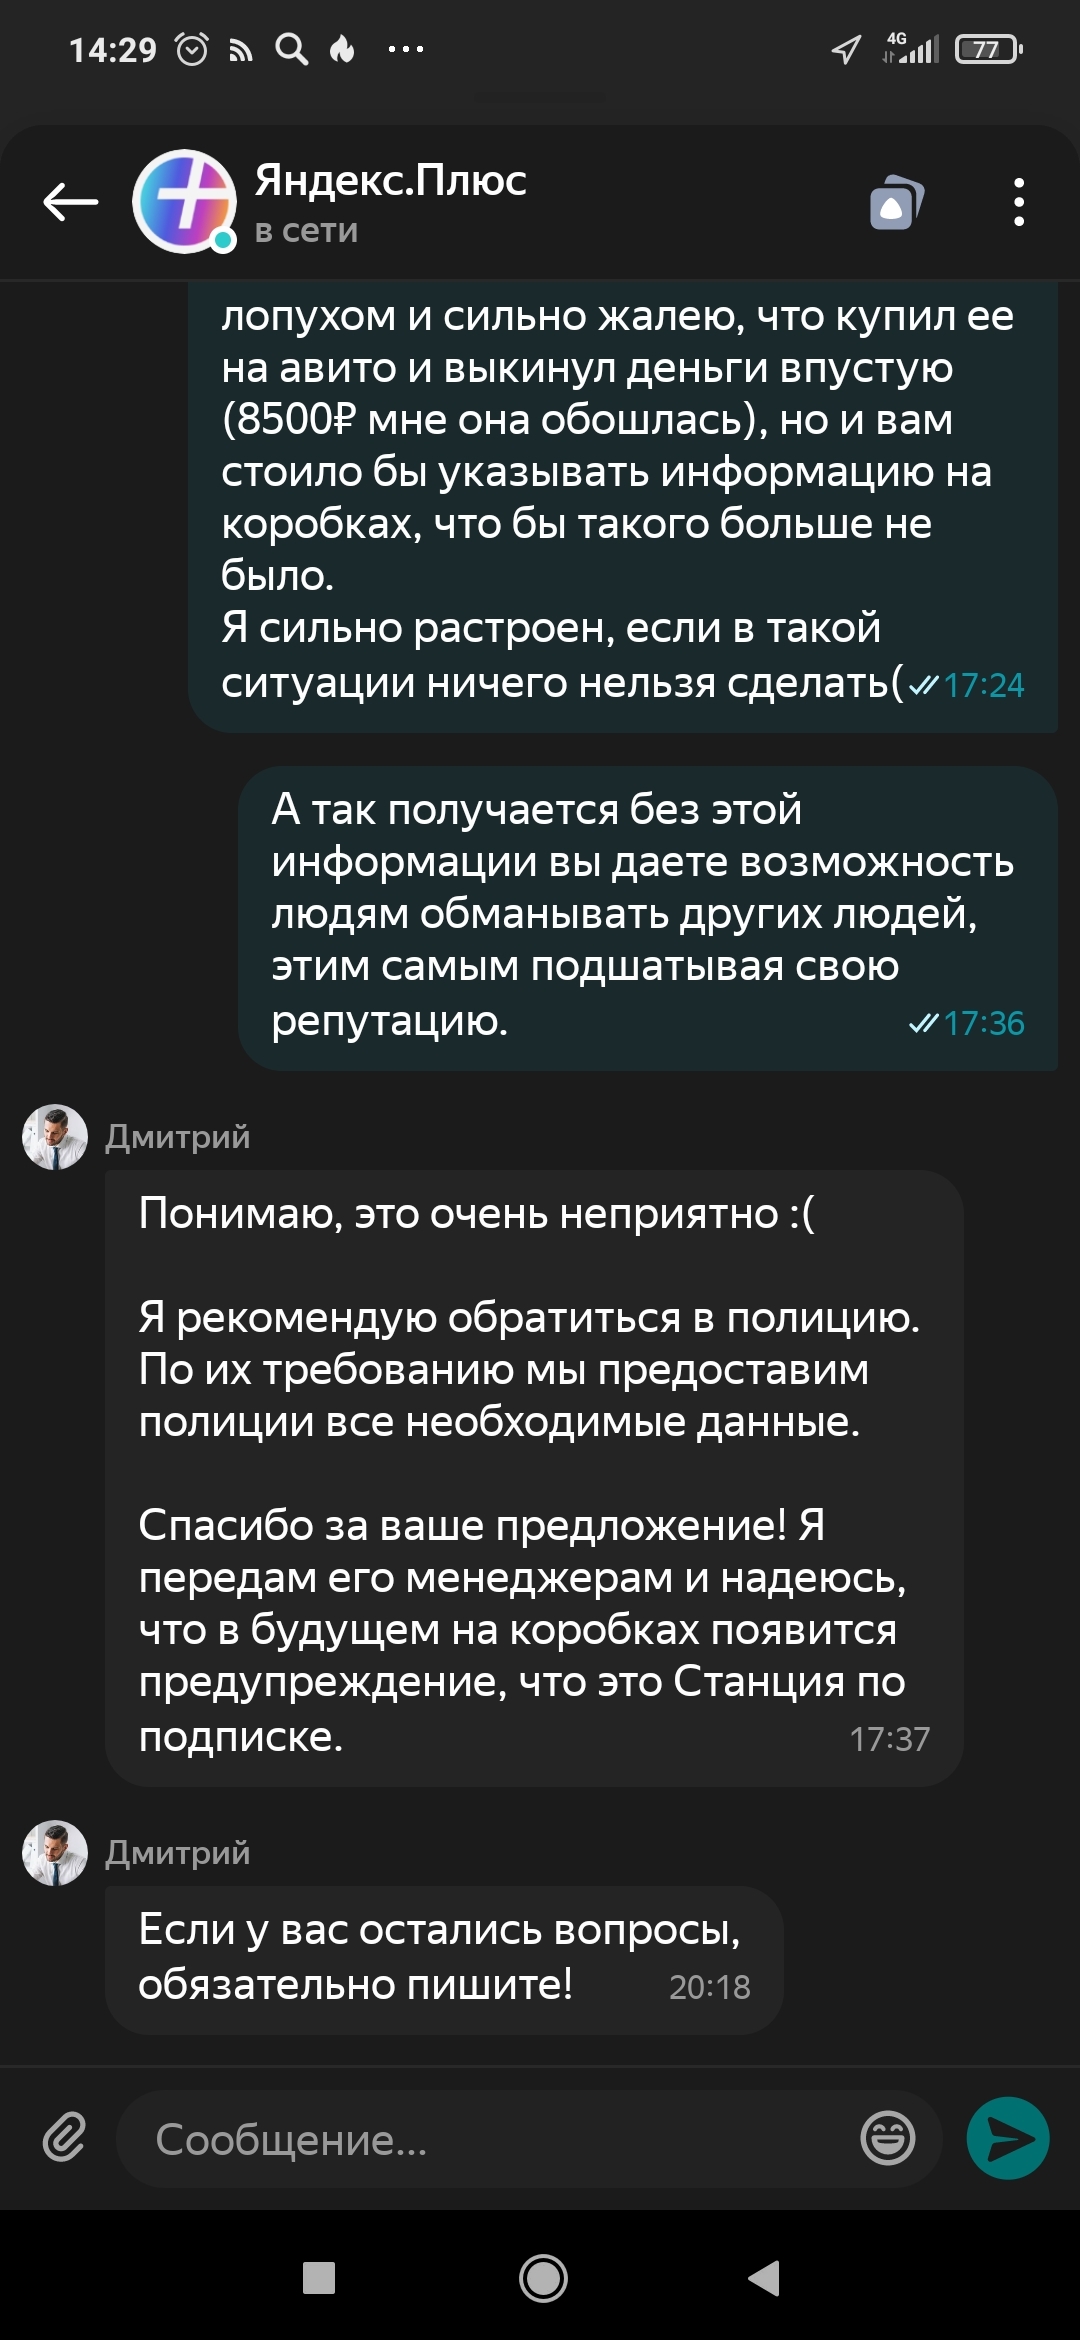 Scam on Avito Yandex station - My, Deception, Avito, Yandex Alice, Yandex., Yandex Station, No rating, Longpost, Negative